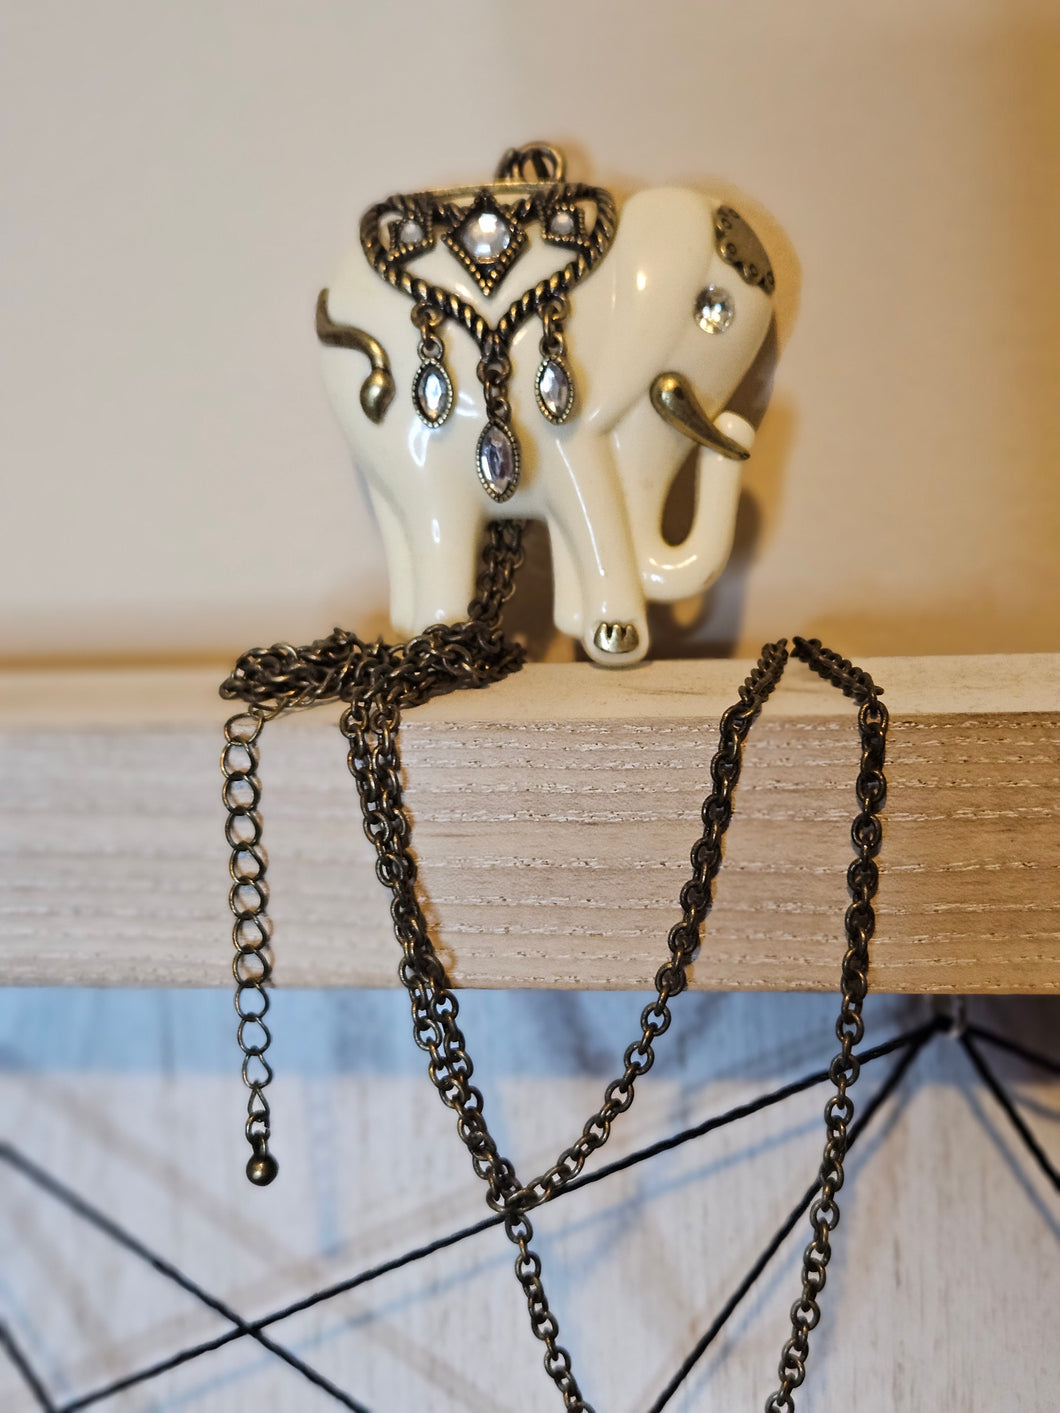 Vgt elephant necklace, Signed NRT